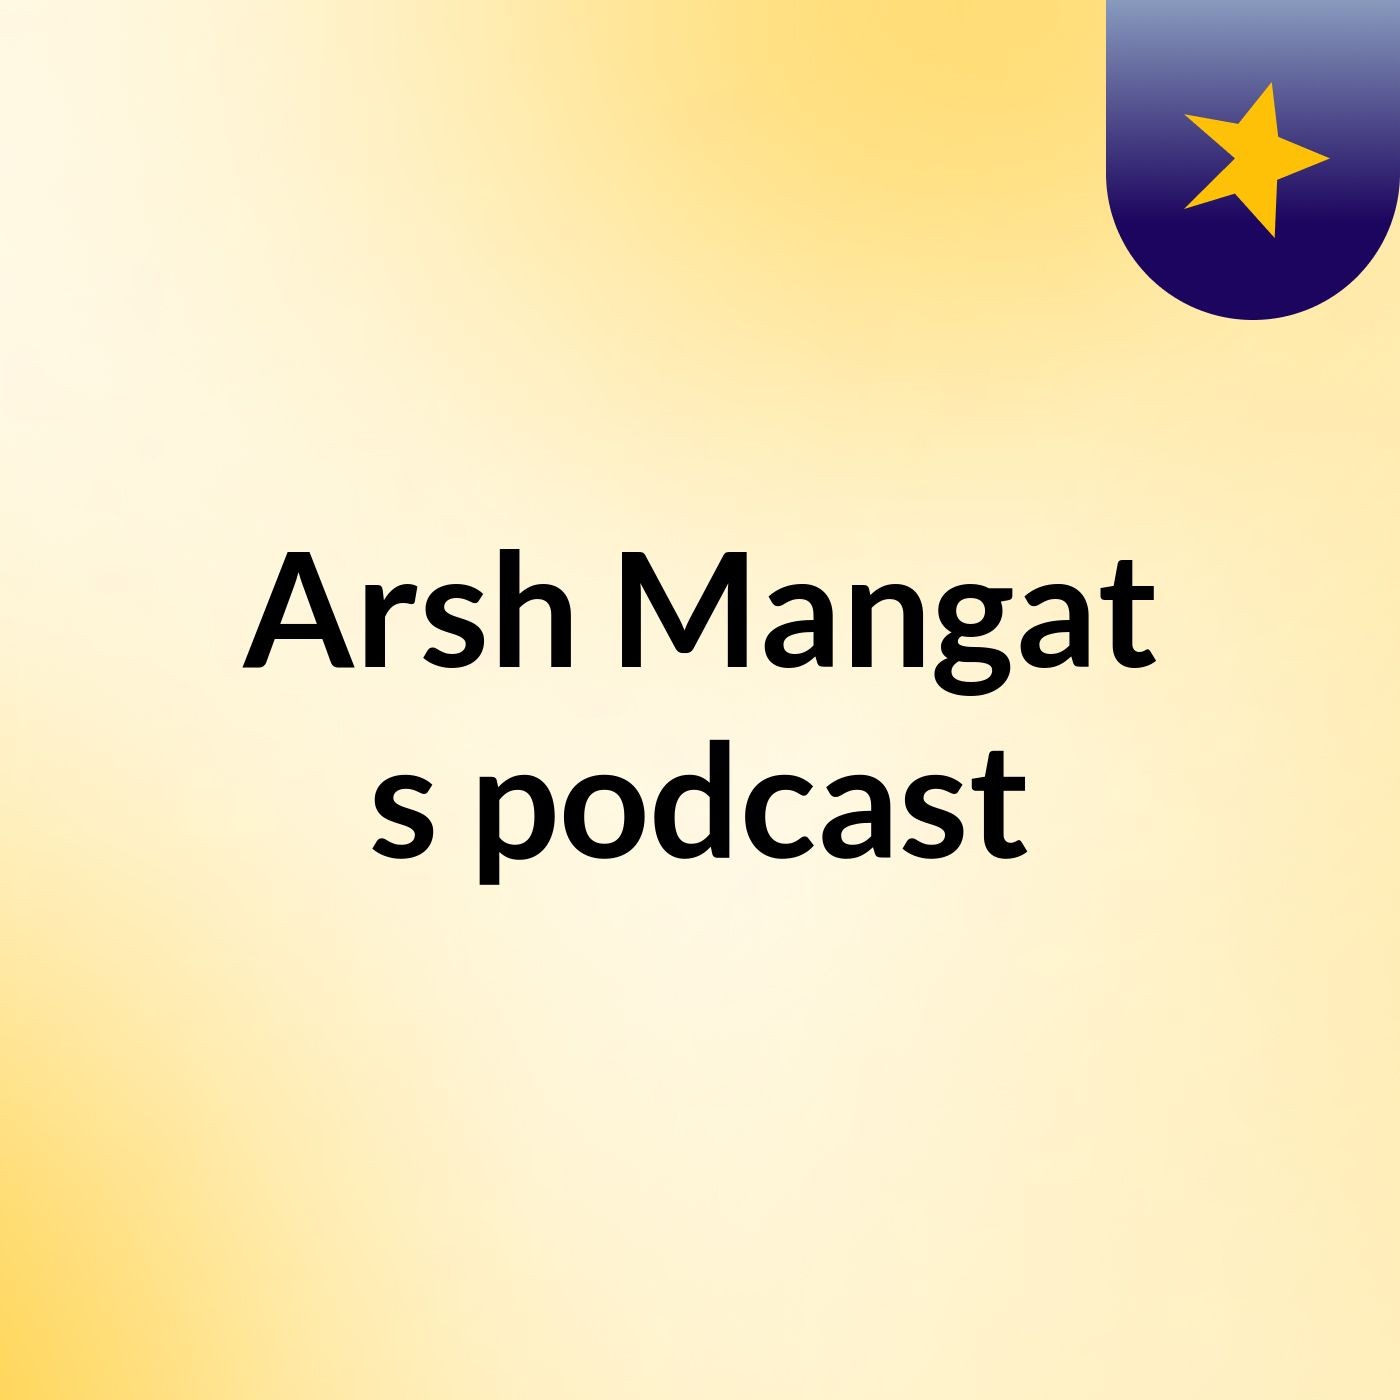 Episode 4 - Arsh Mangat's podcast